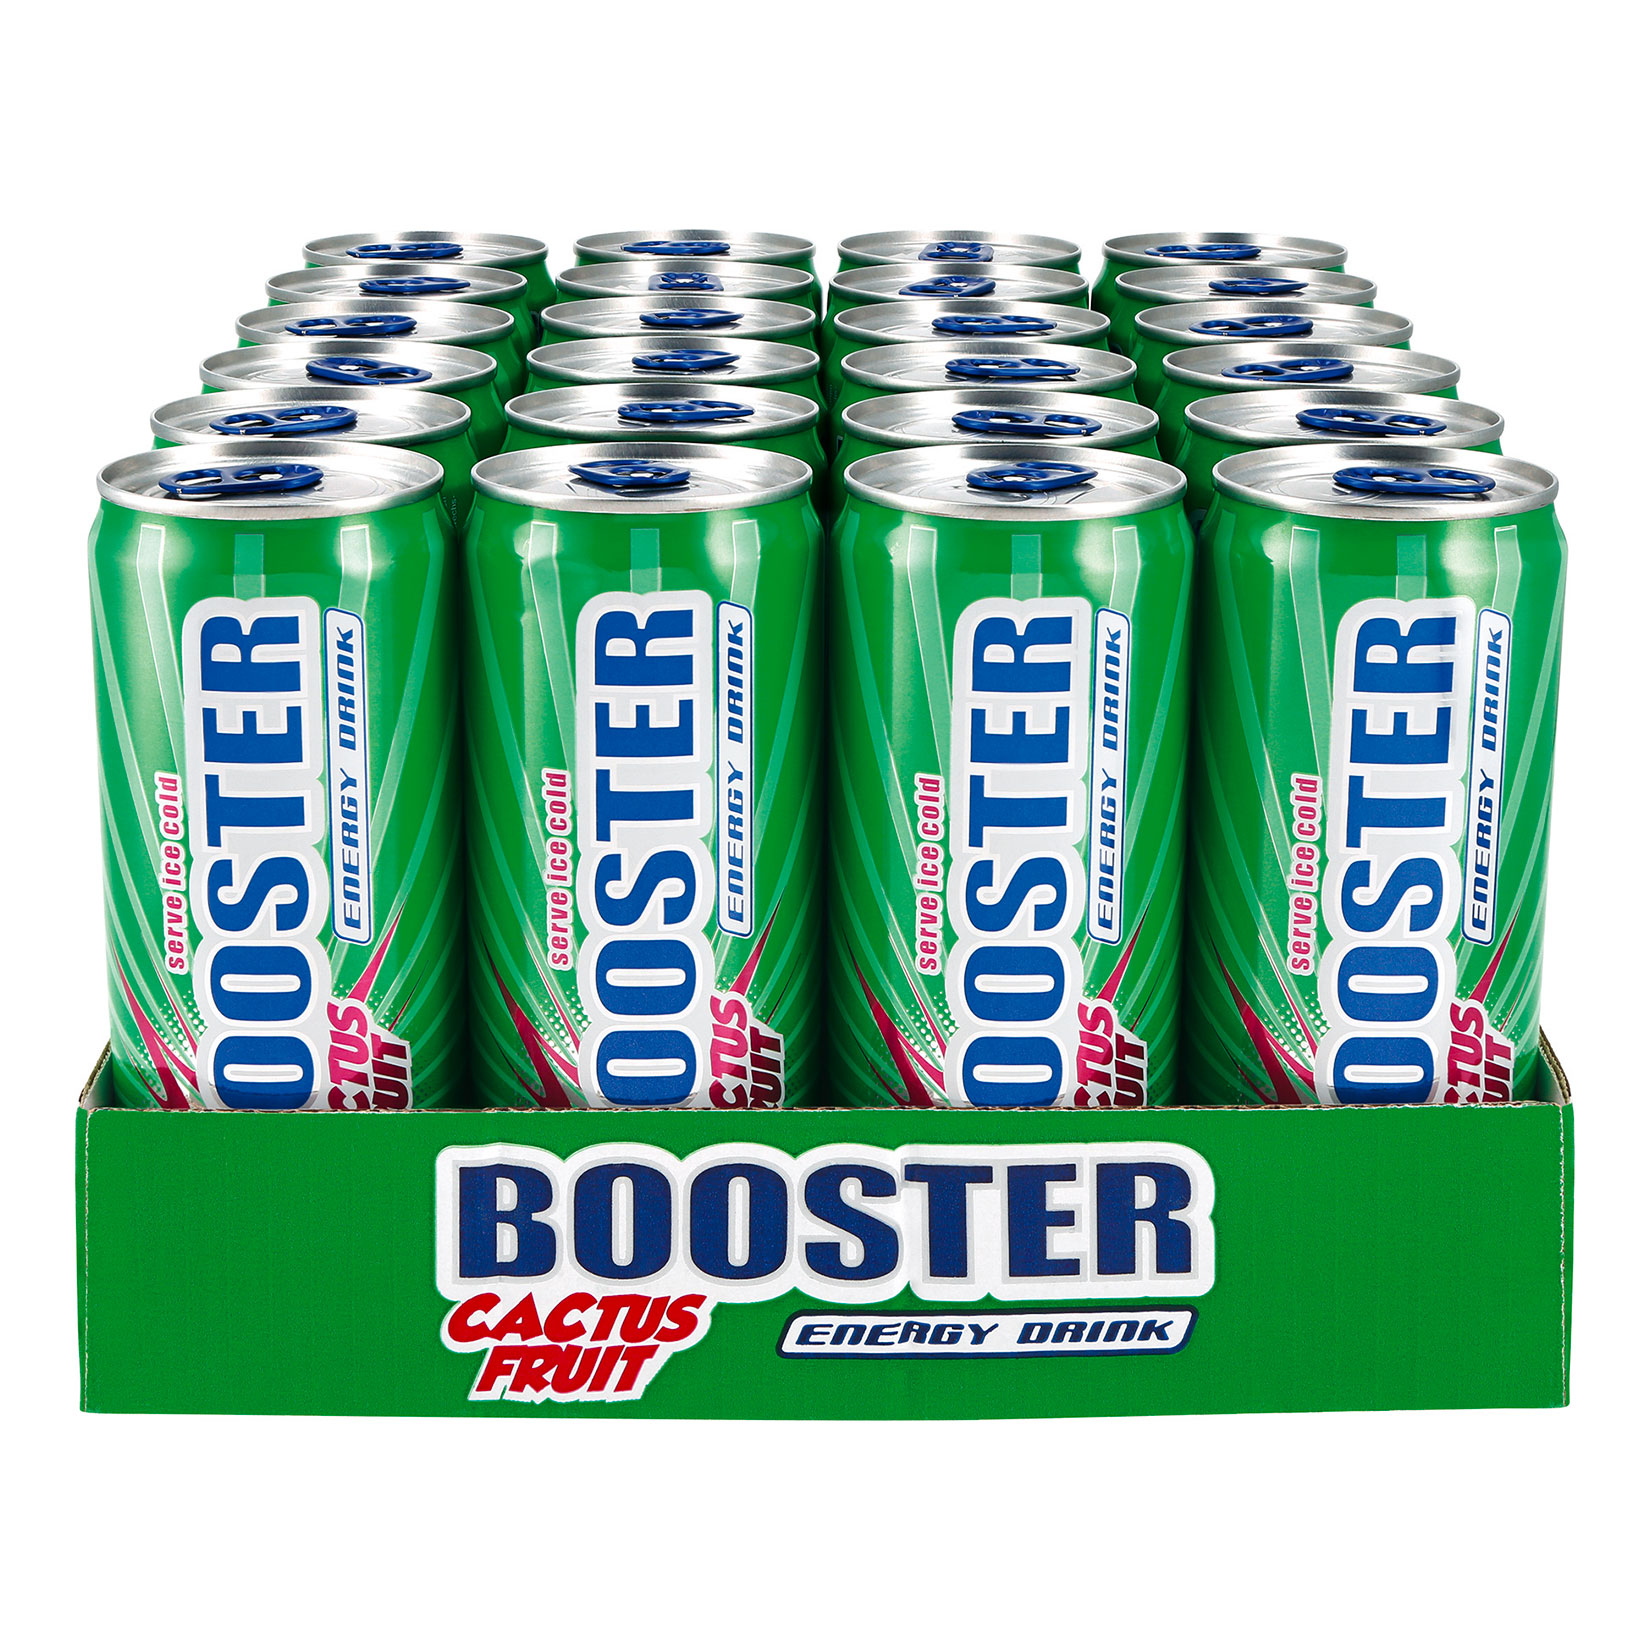 Booster Energy Drink Kaktusfrucht 0,33 Liter Dose, 24er Pack online kaufen  bei Netto